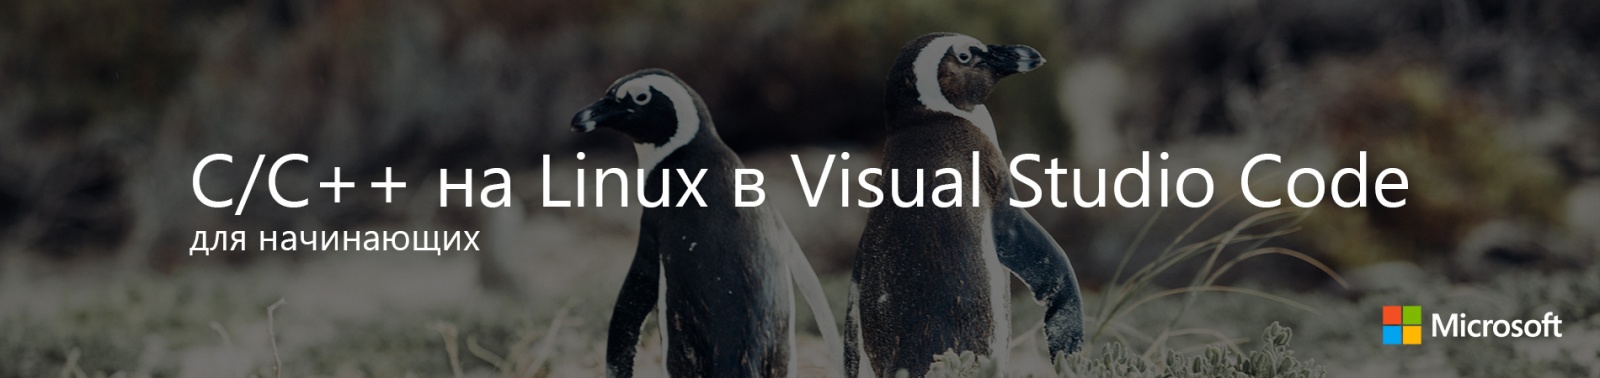 С-С++ на Linux в Visual Studio Code для начинающих - 1